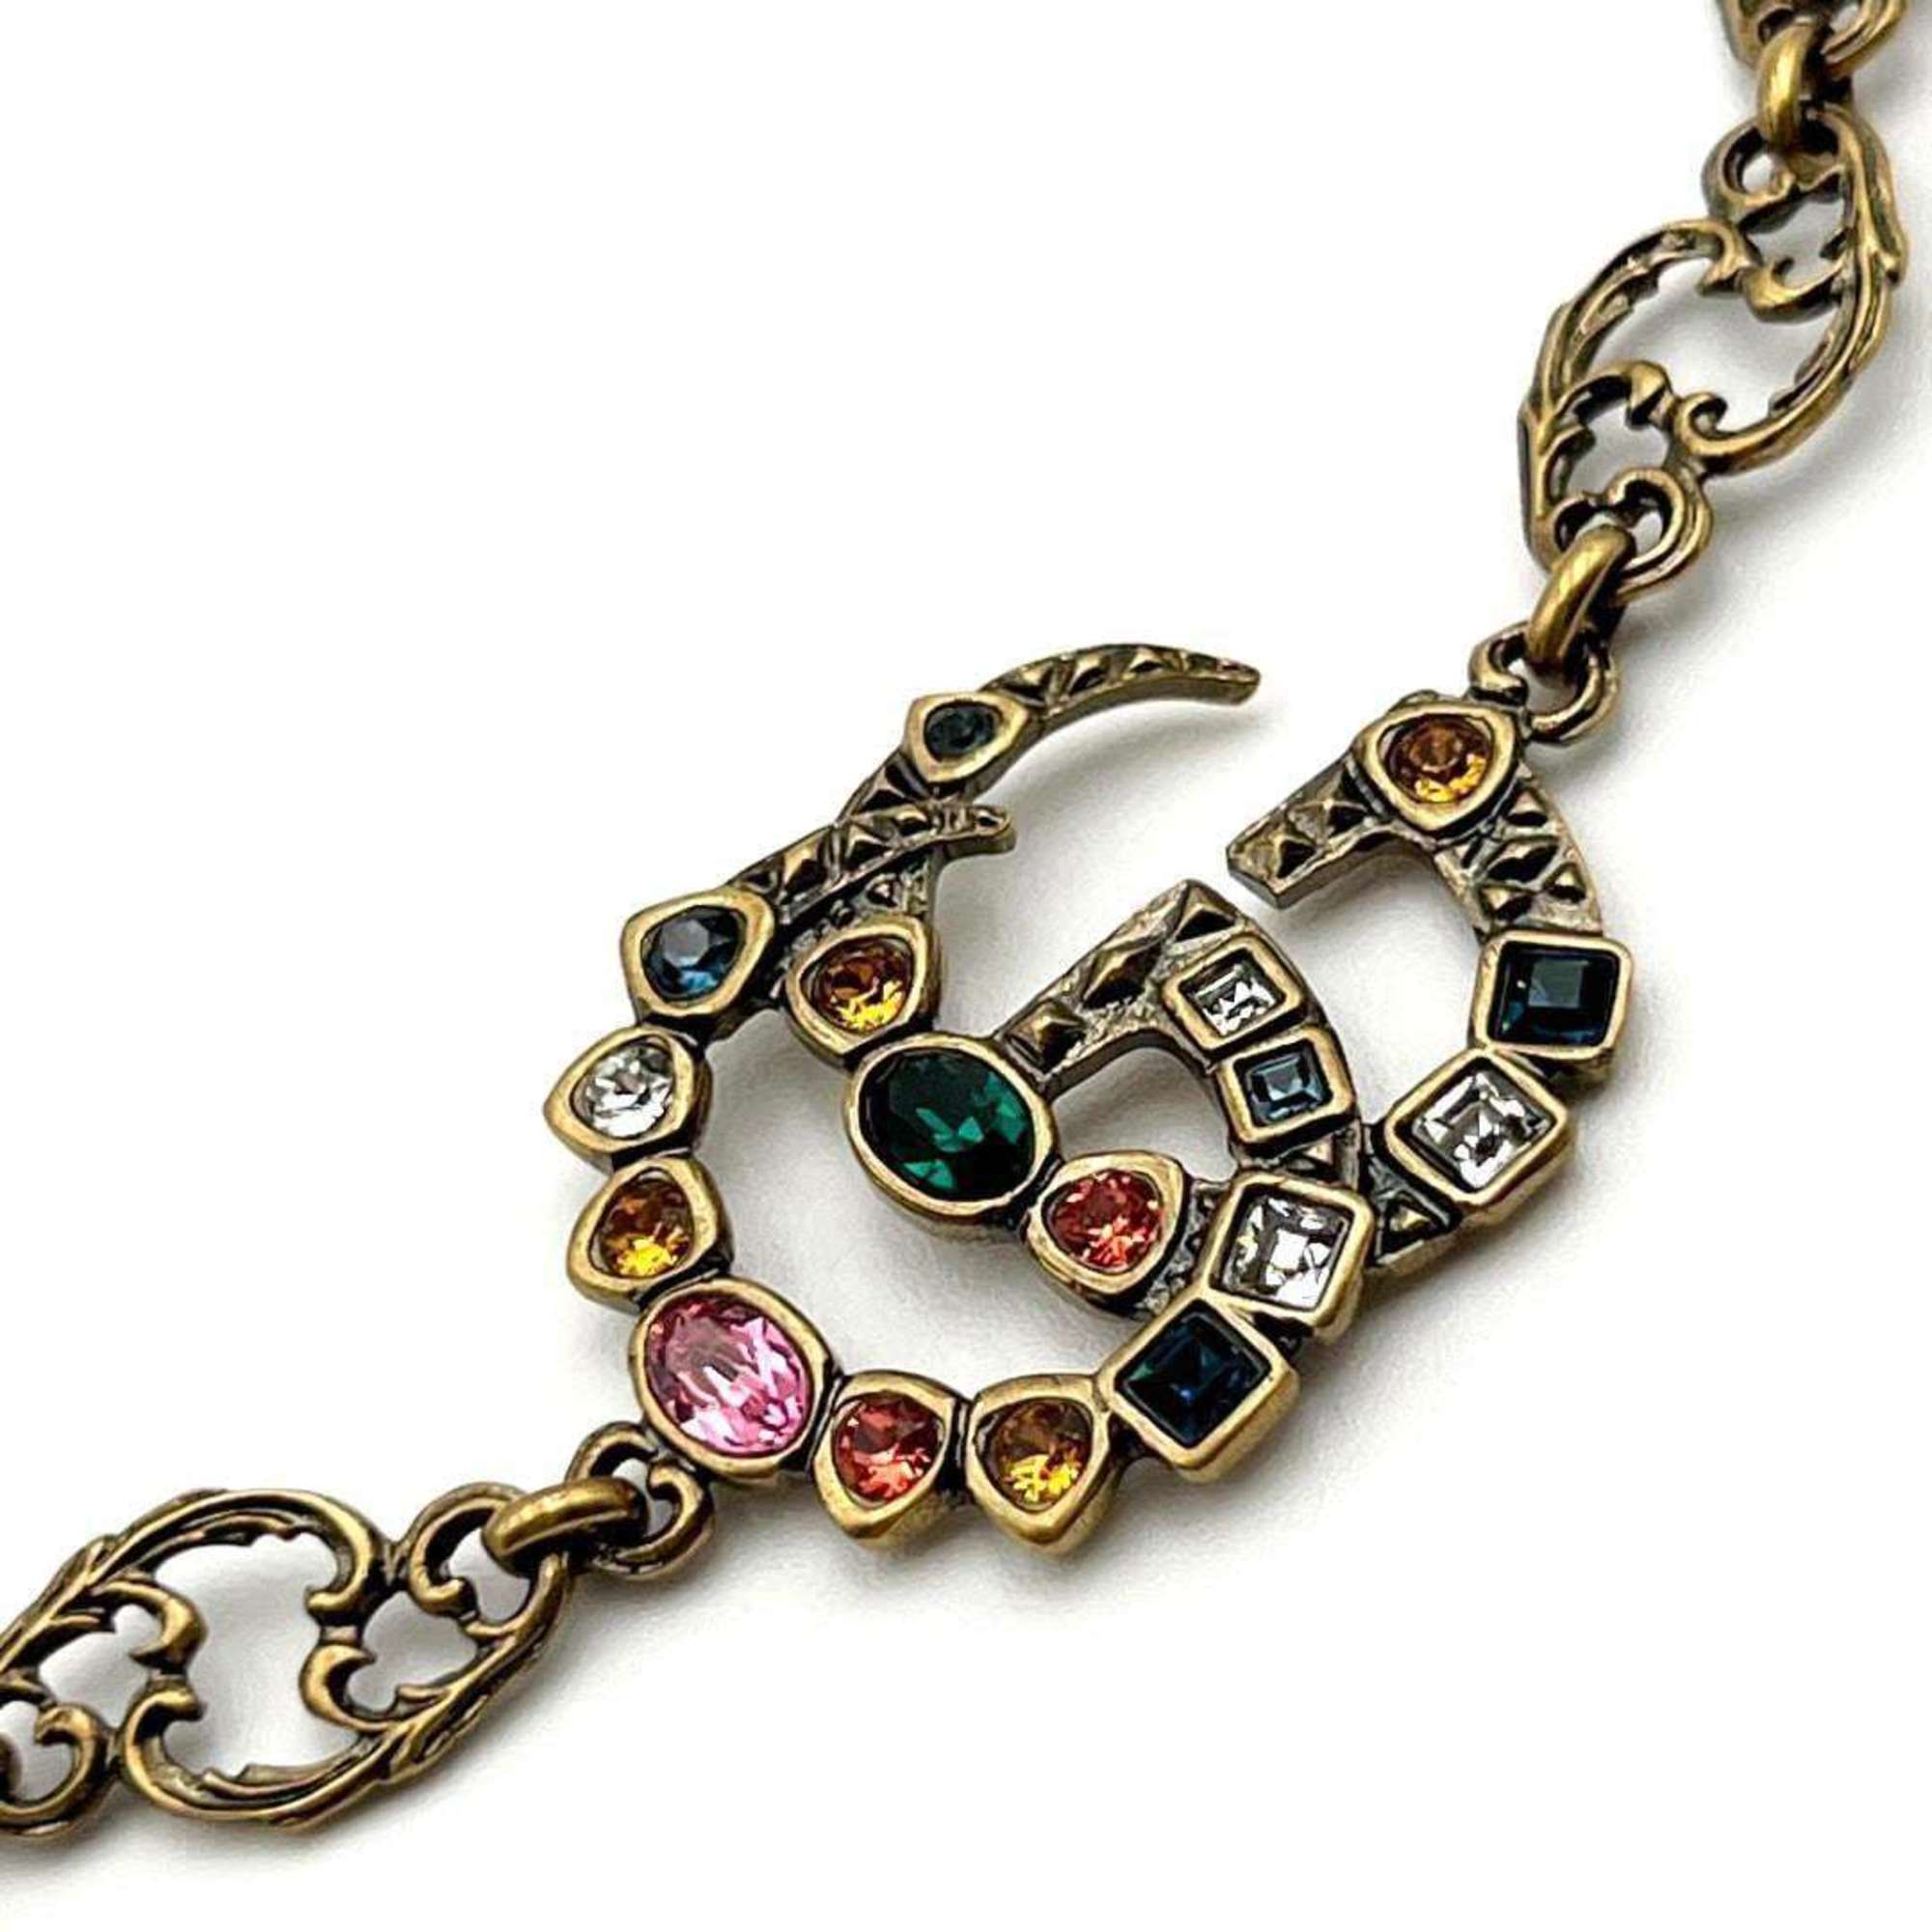 GUCCI Women's Double G Multicolor Crystal Bracelet Bangle